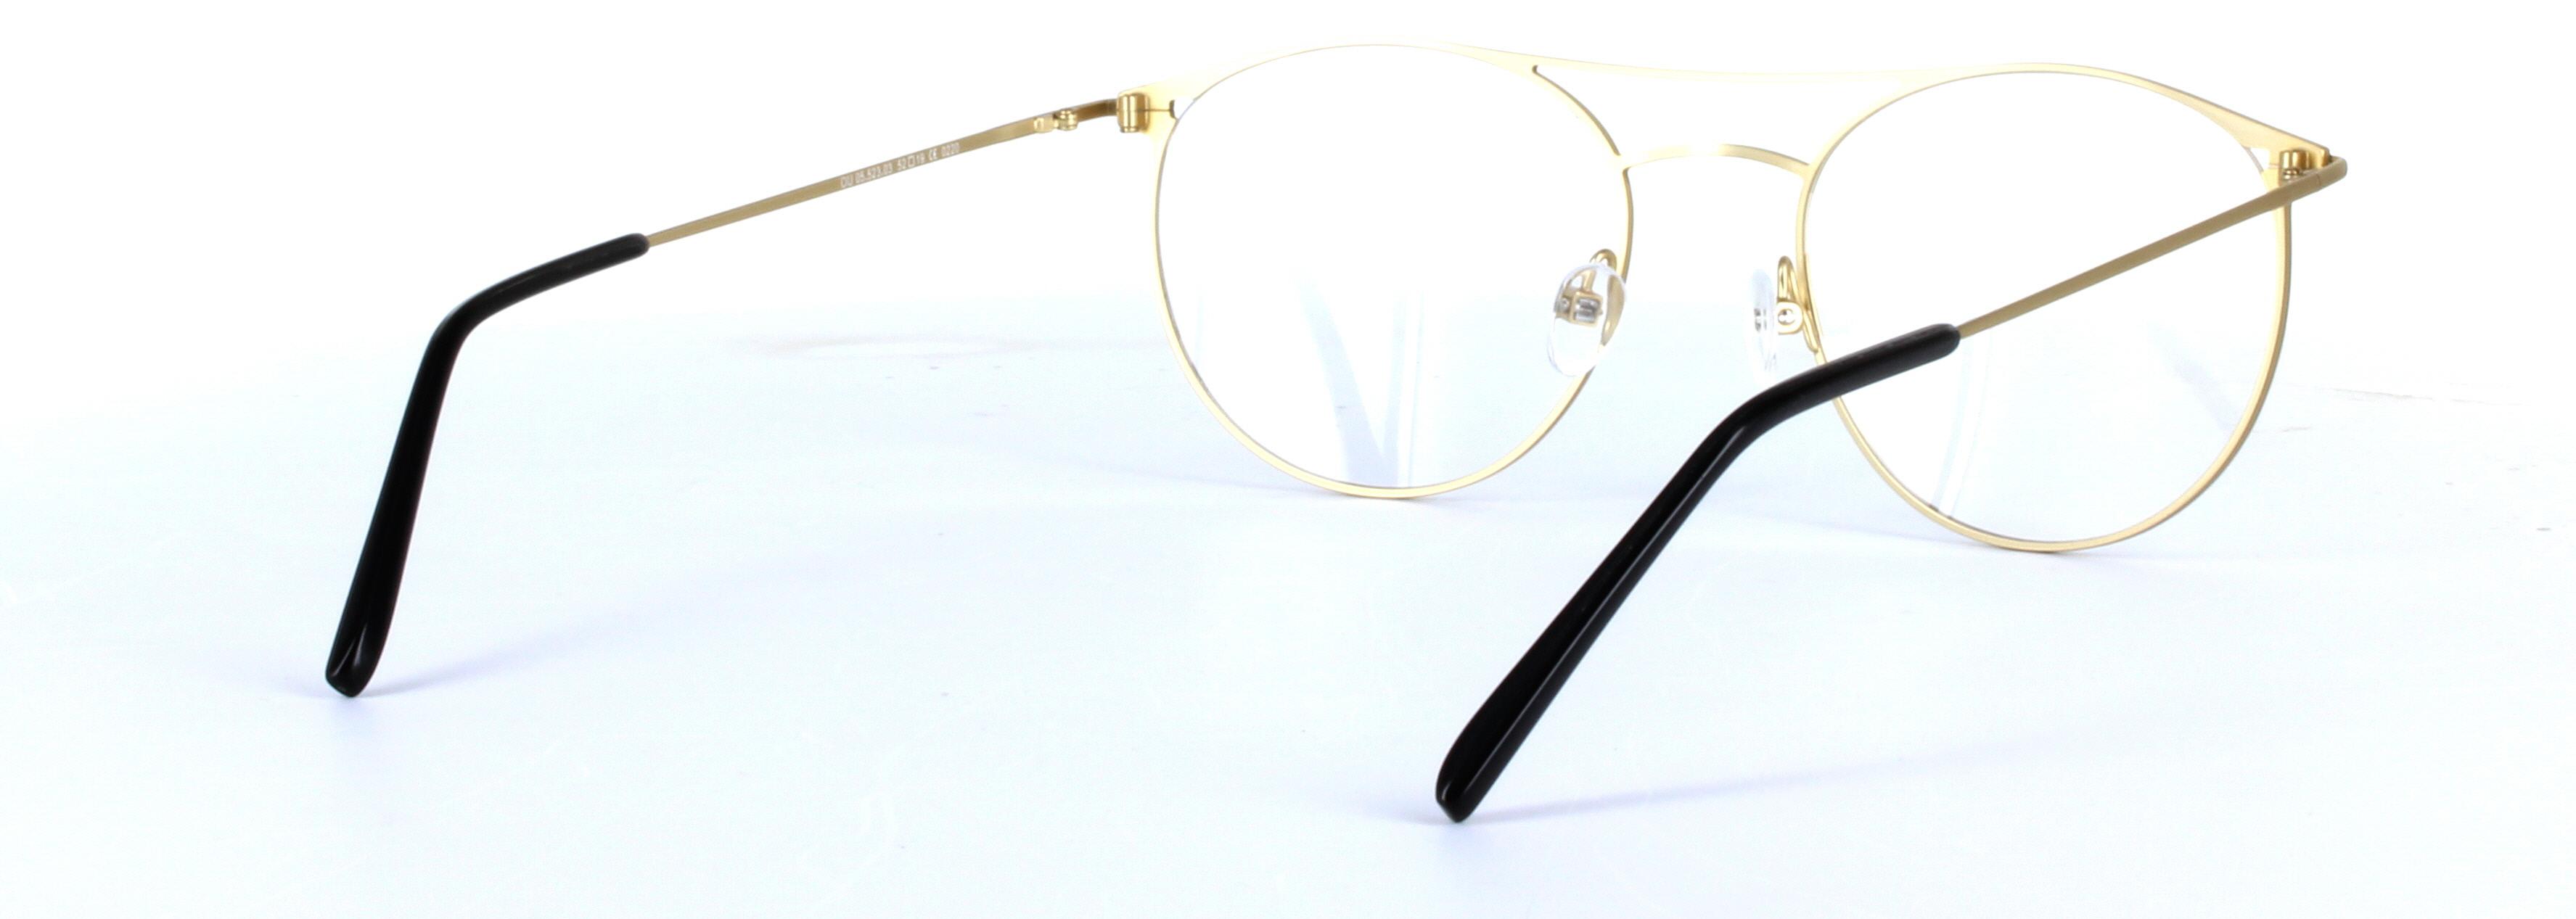 Dexter Olive Green Full Rim Round Metal Glasses - Image View 4